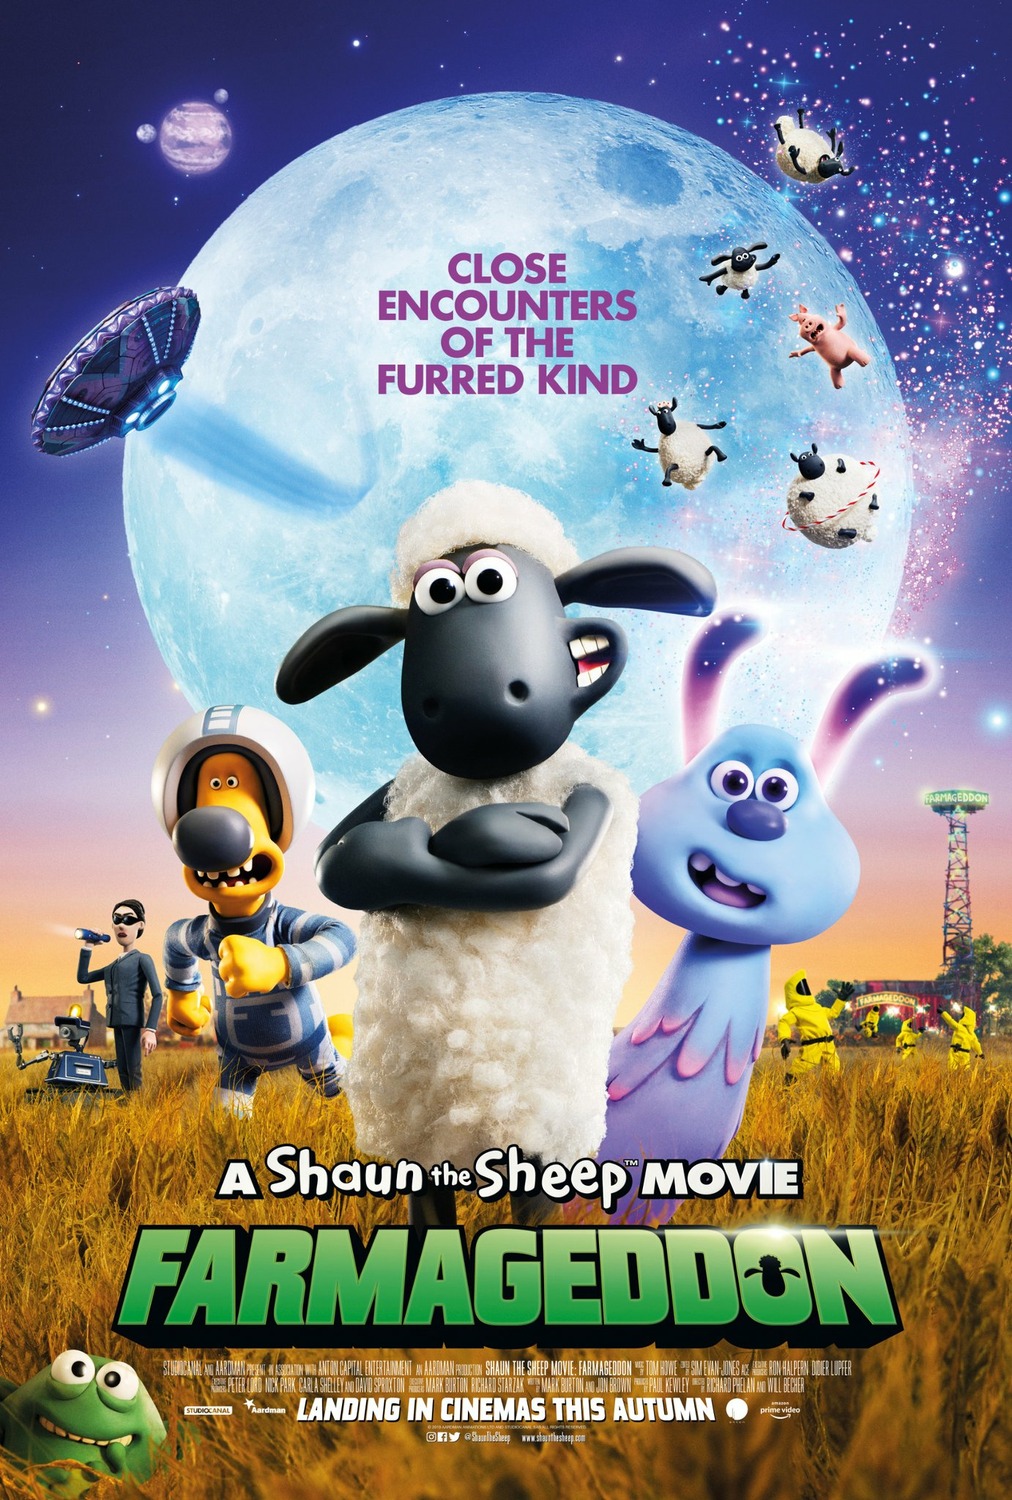 A Shaun The Sheep Movie: Farmageddon film review: wonderful SF fun from Aardman